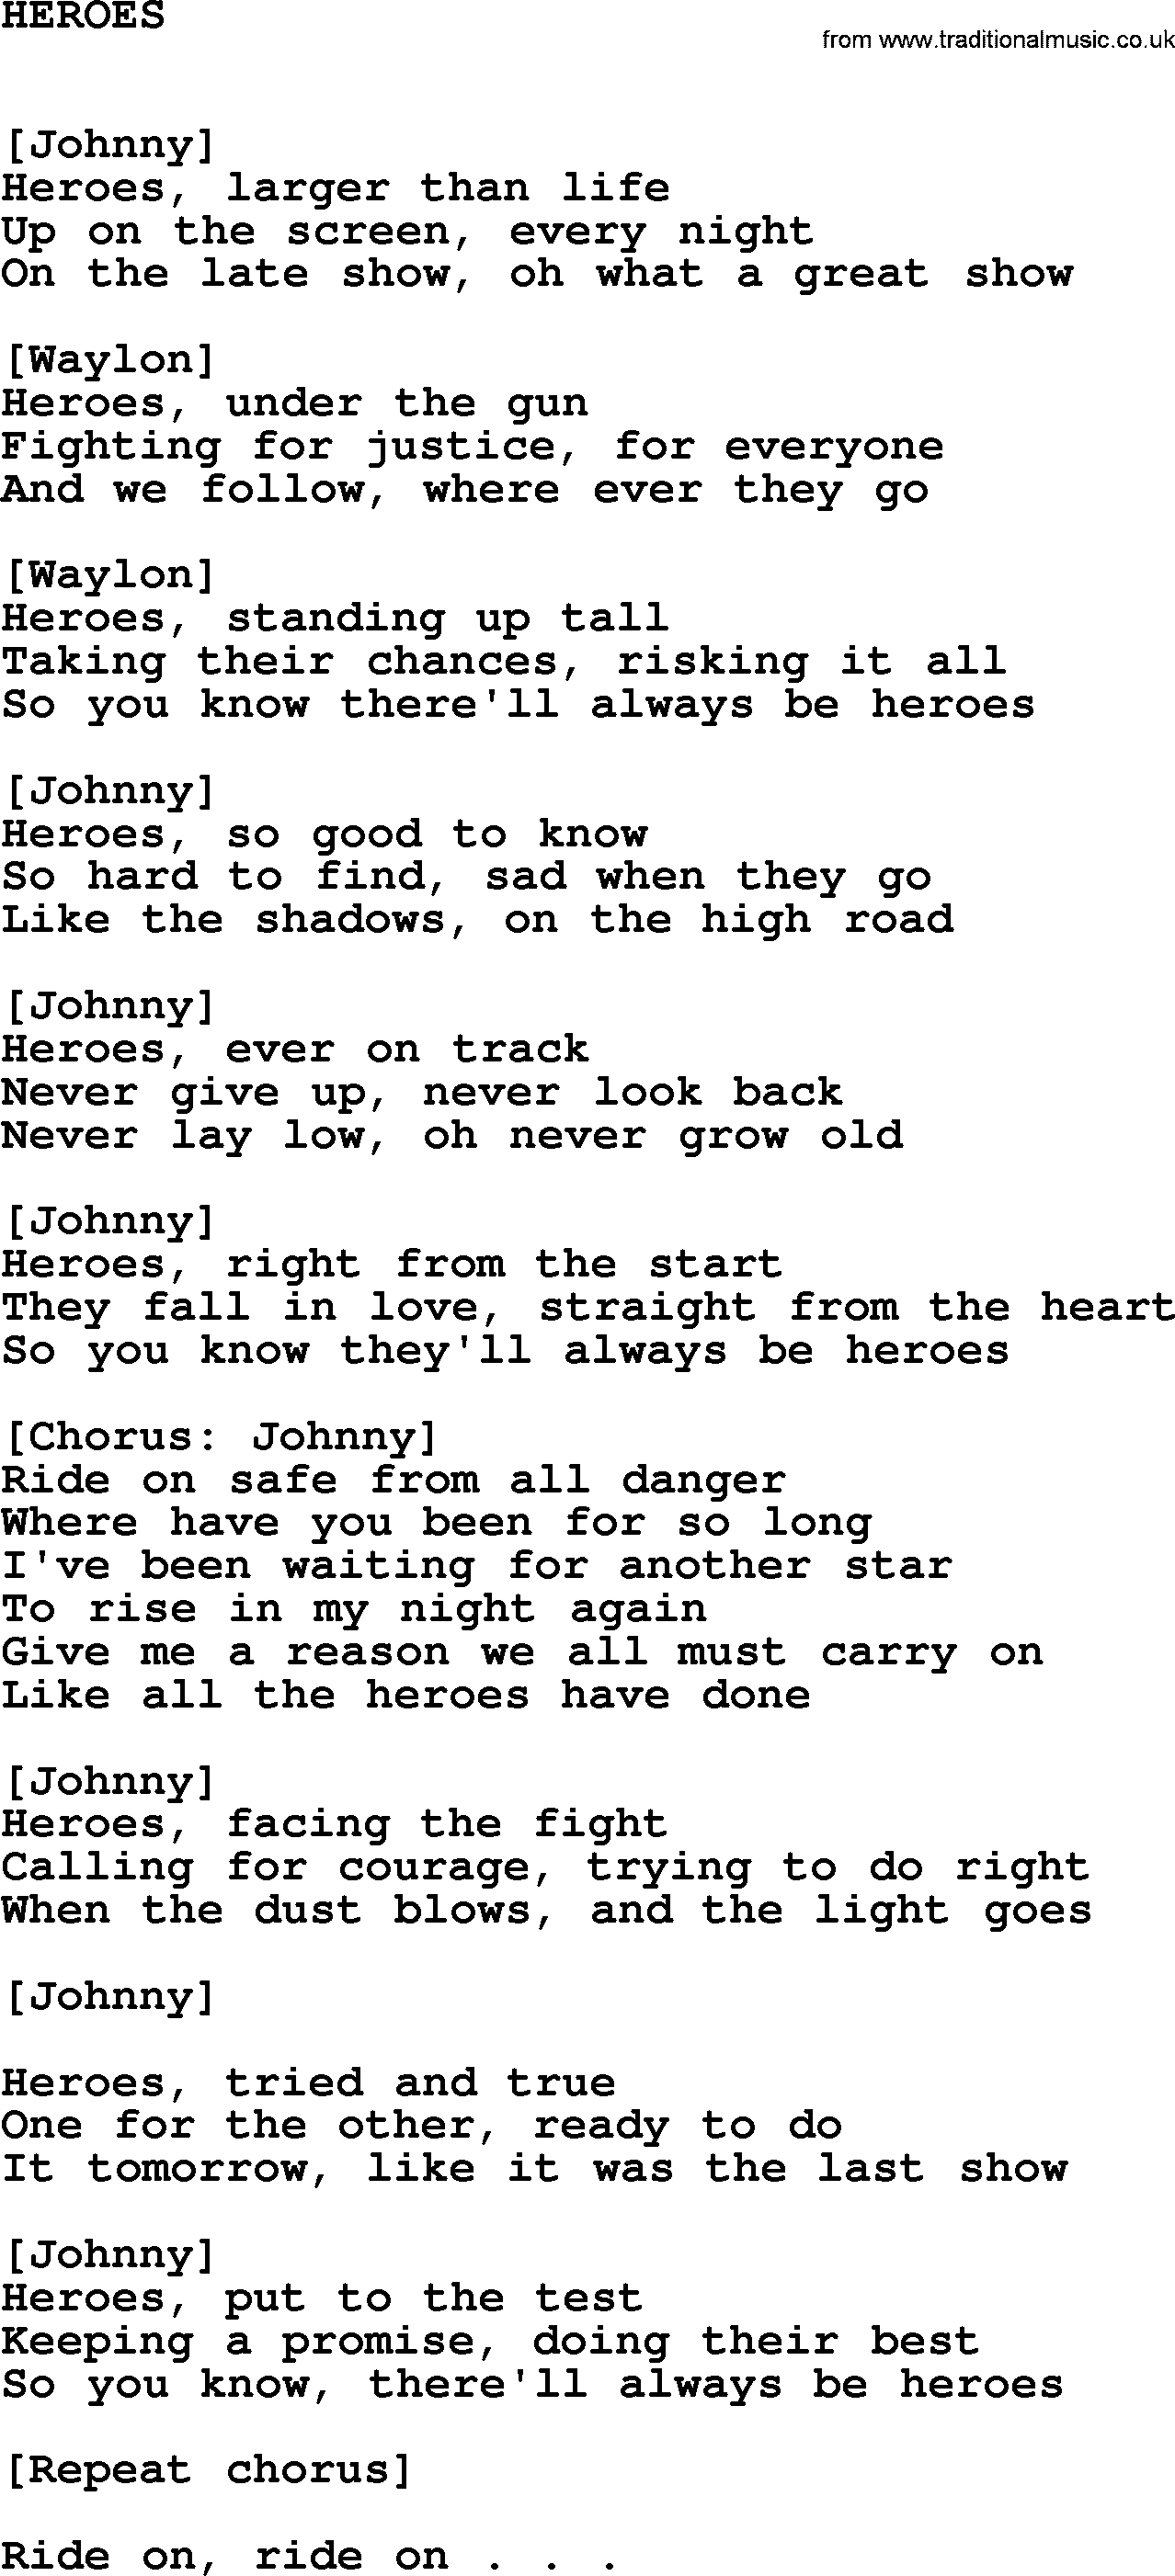 Johnny Cash song Heroes.txt lyrics